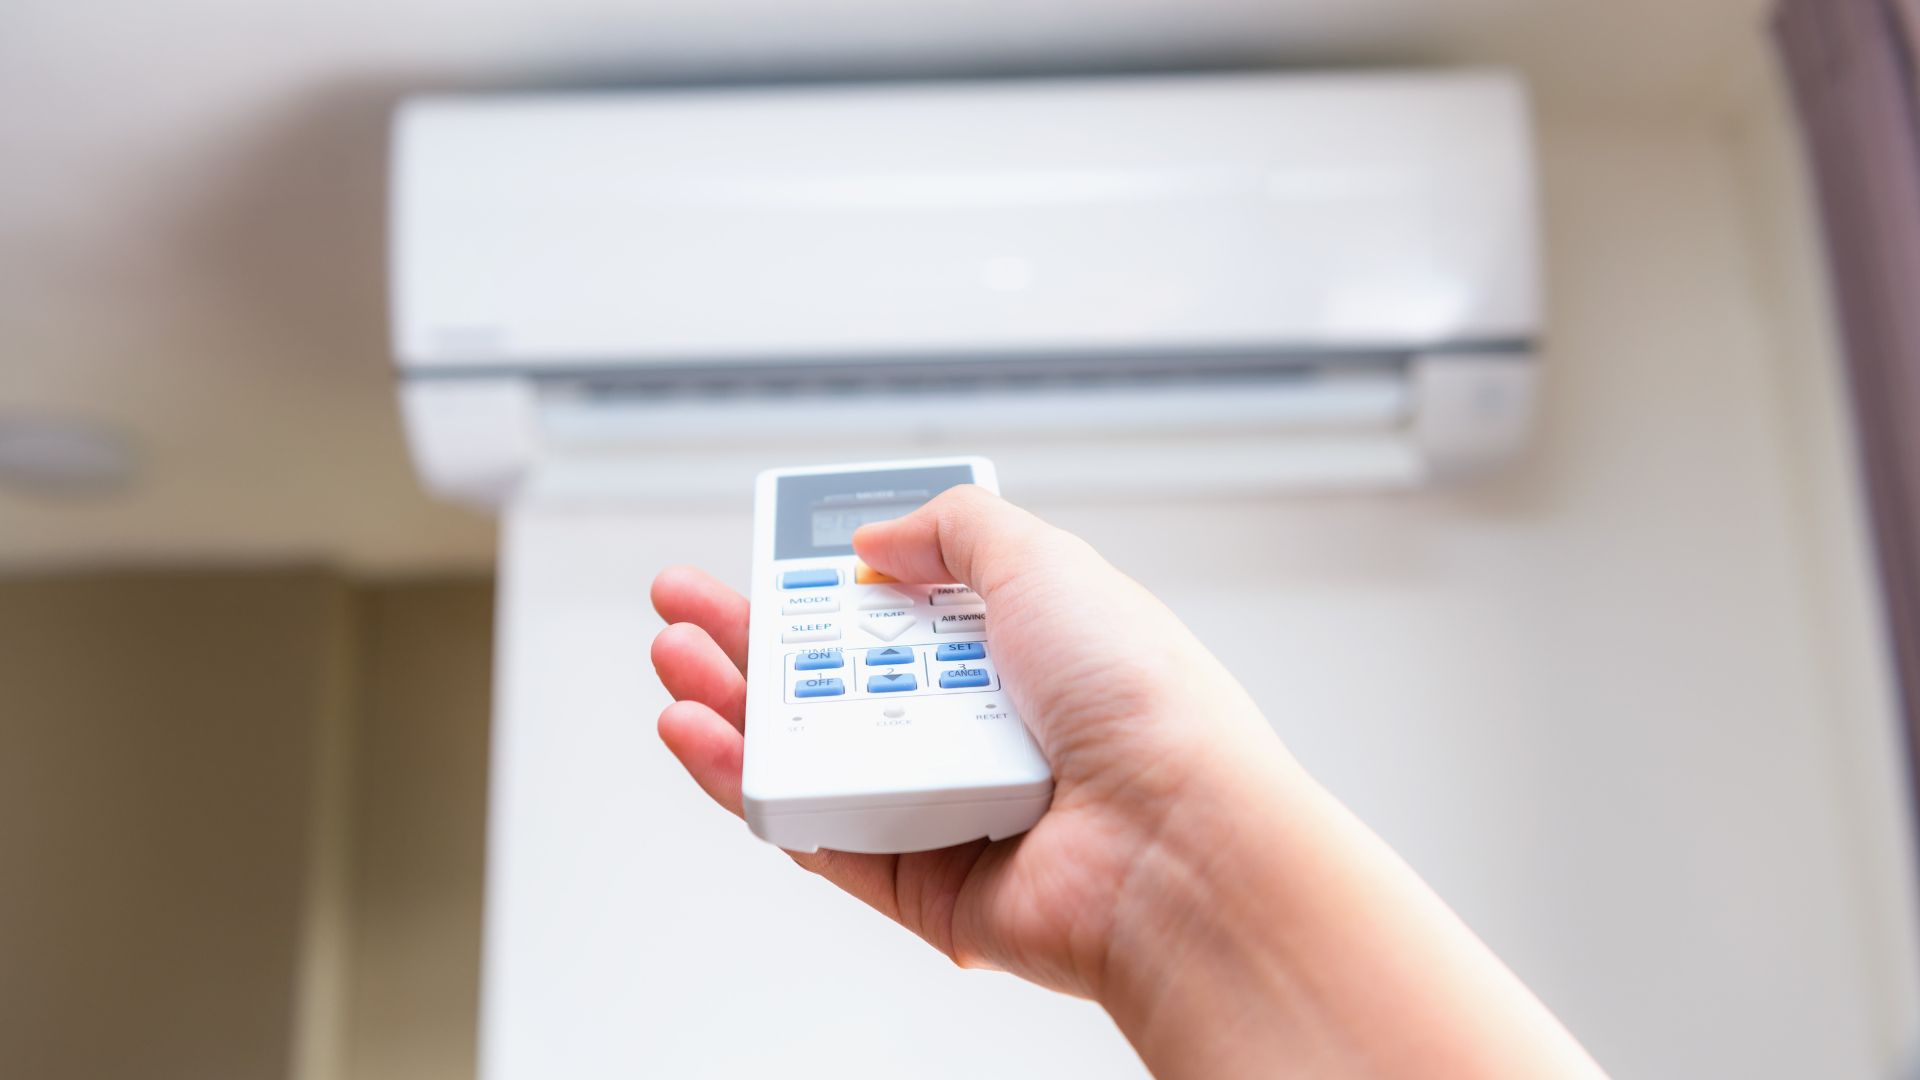 How Do I Reset My Air Conditioner?